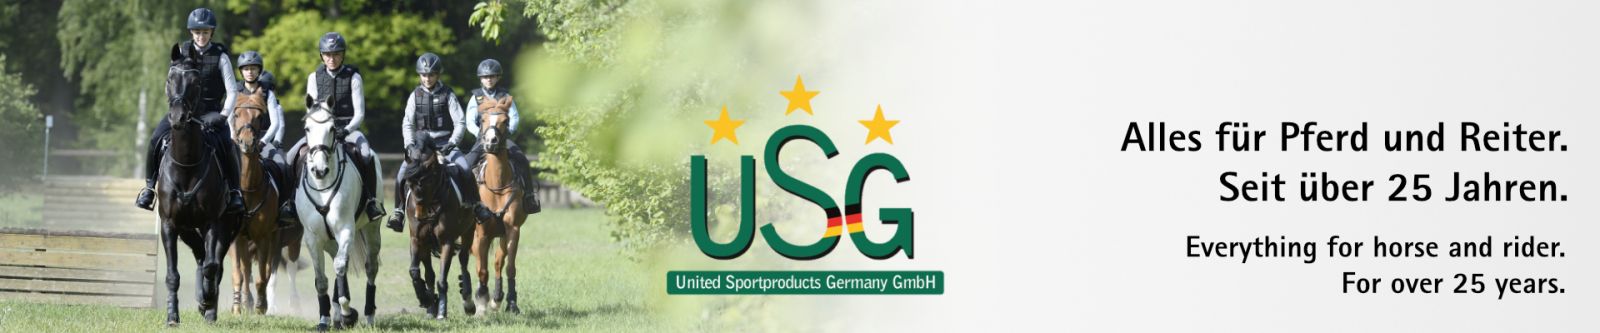 CE-Konformitätserklärungen - USG - United Sportproducts Germany GmbH